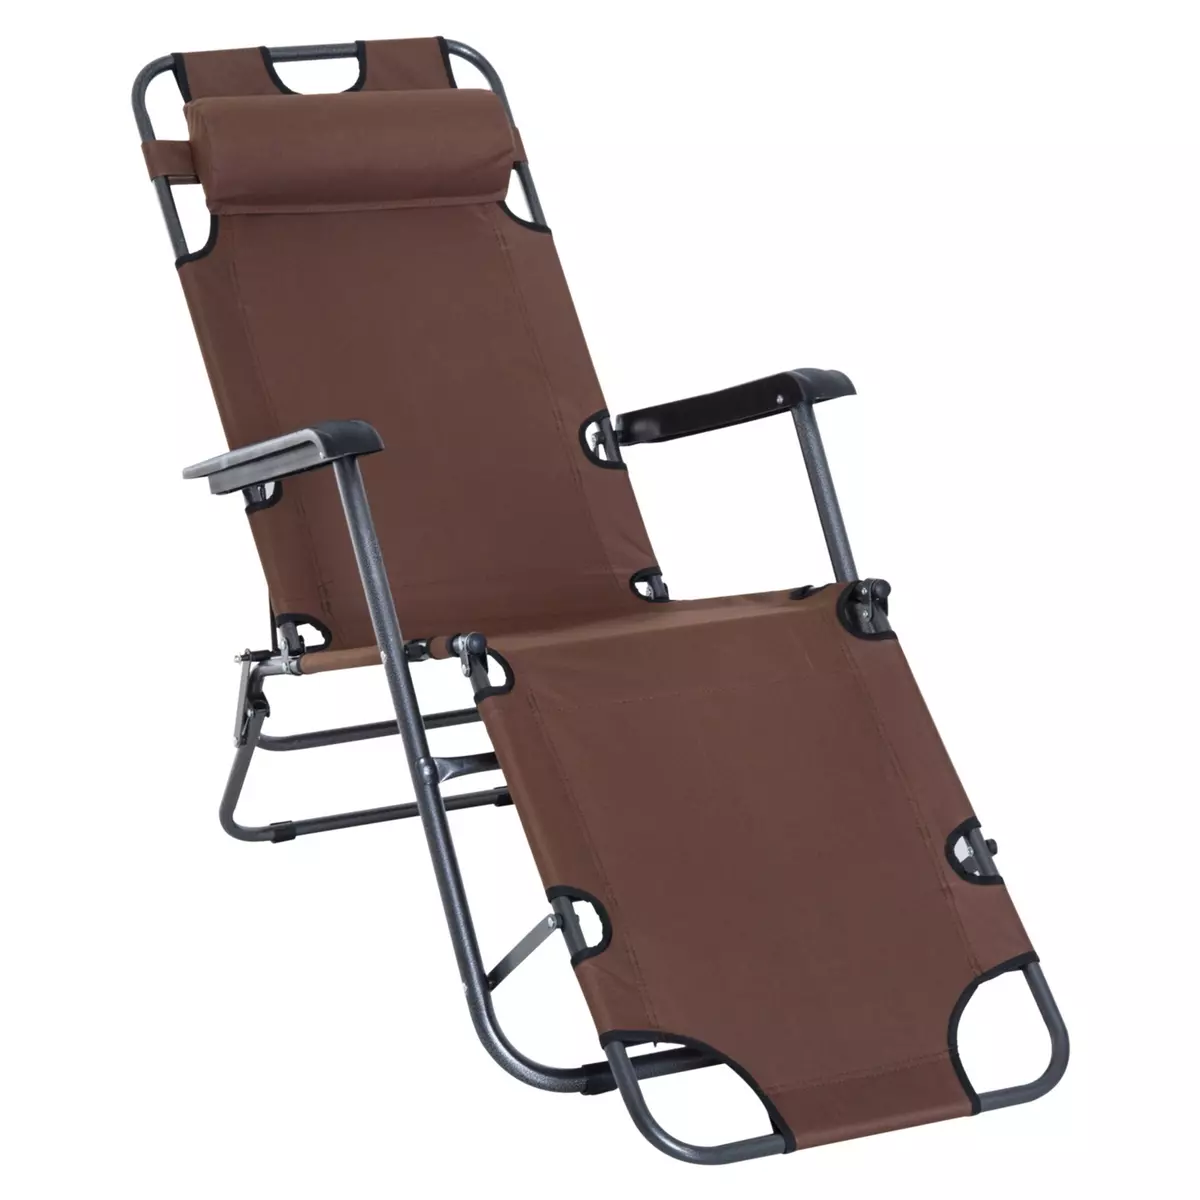 OUTSUNNY Outsunny Chaise longue pliable bain de soleil transat de relaxation dossier inclinable avec repose-pied polyester oxford marron